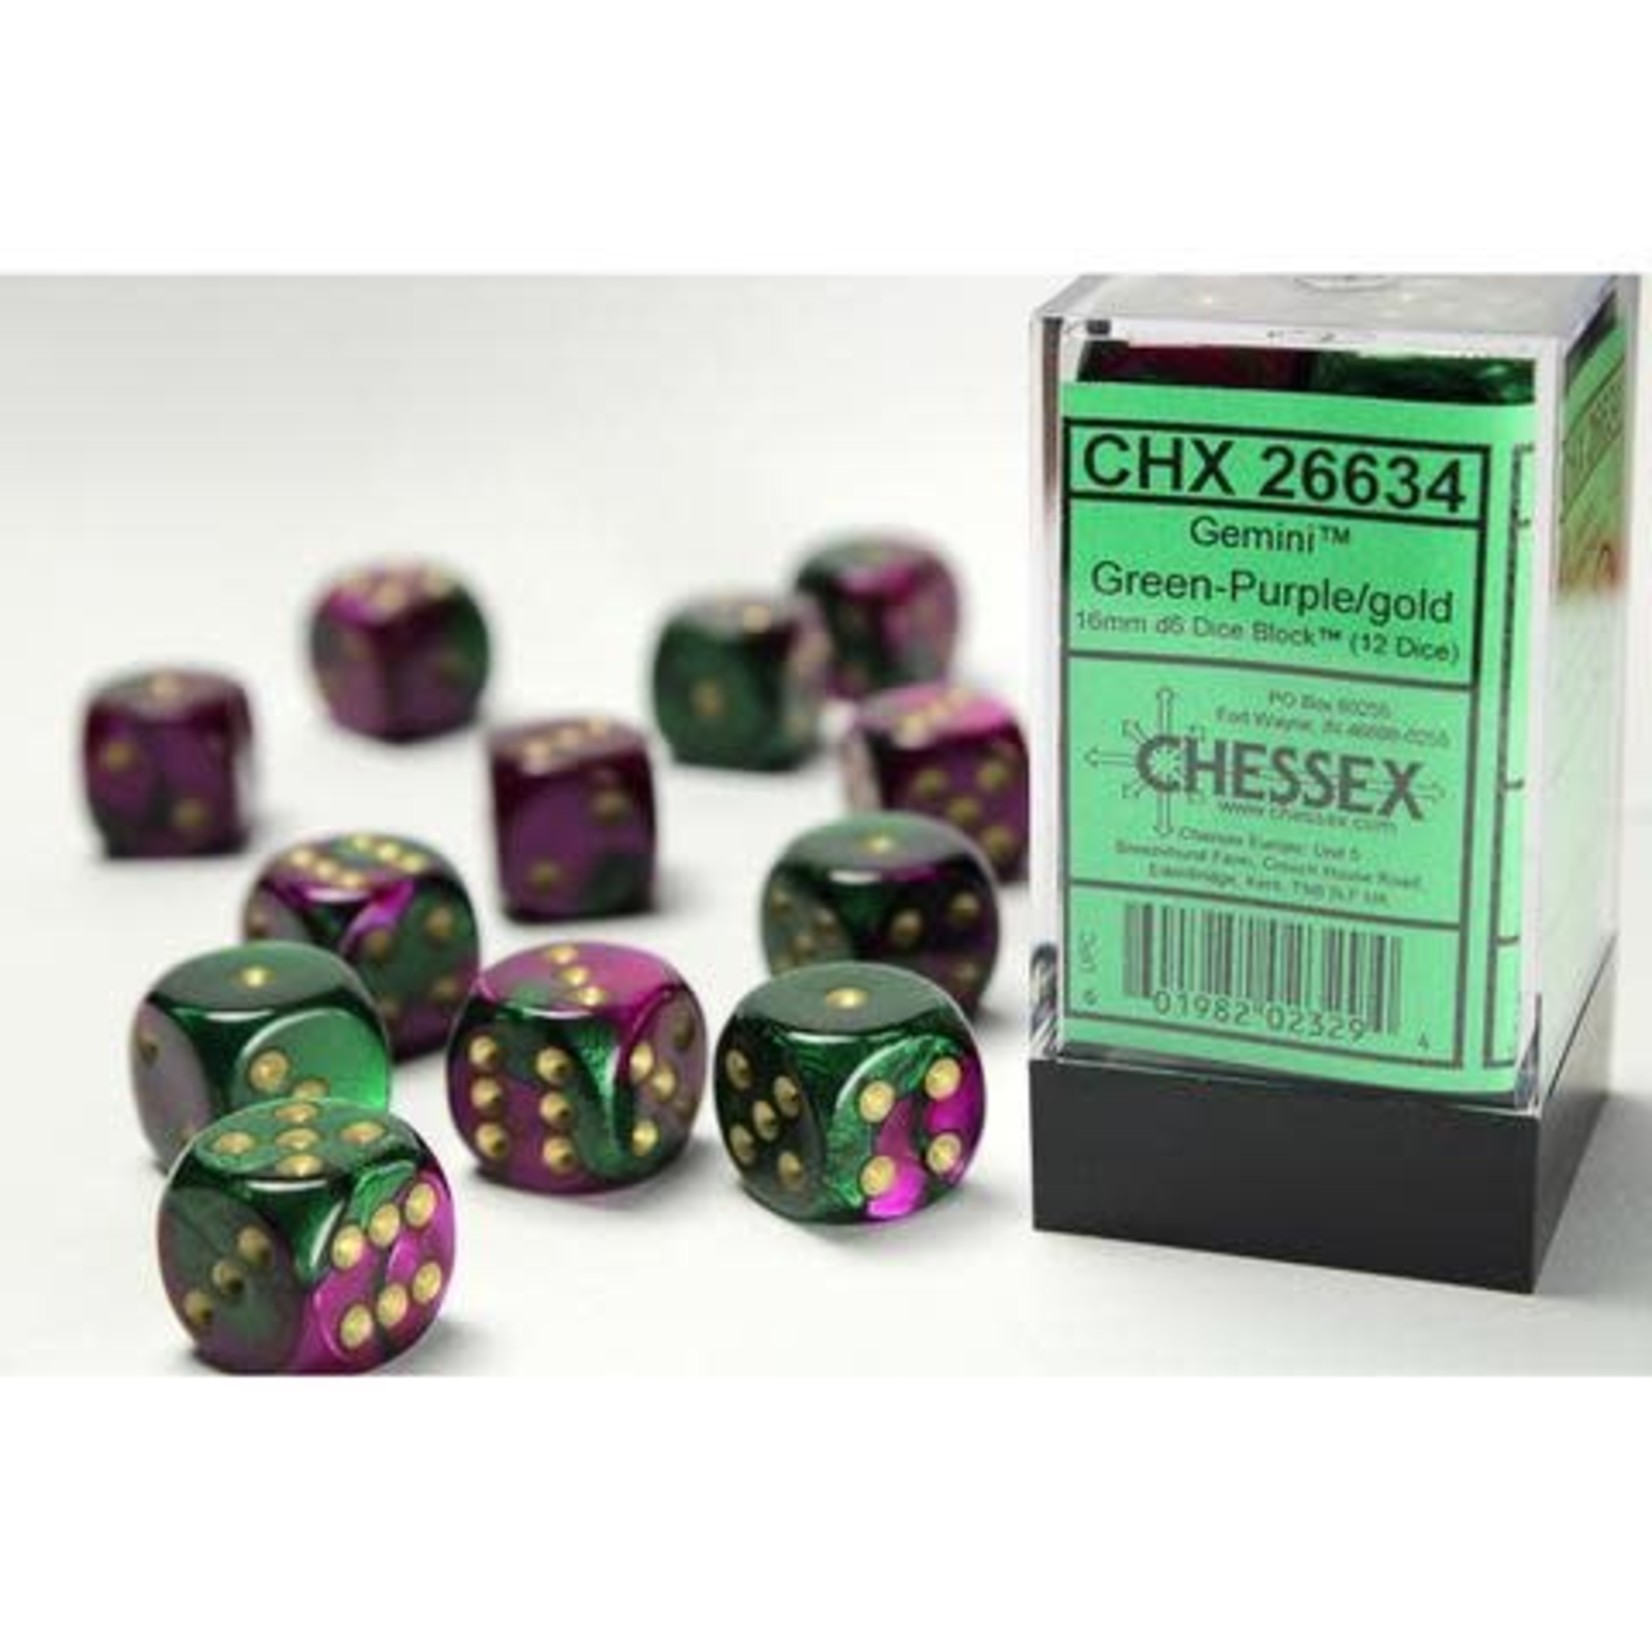 Chessex Chessex Gemini Green / Purple / Gold with Black 16 mm d6 12 die set